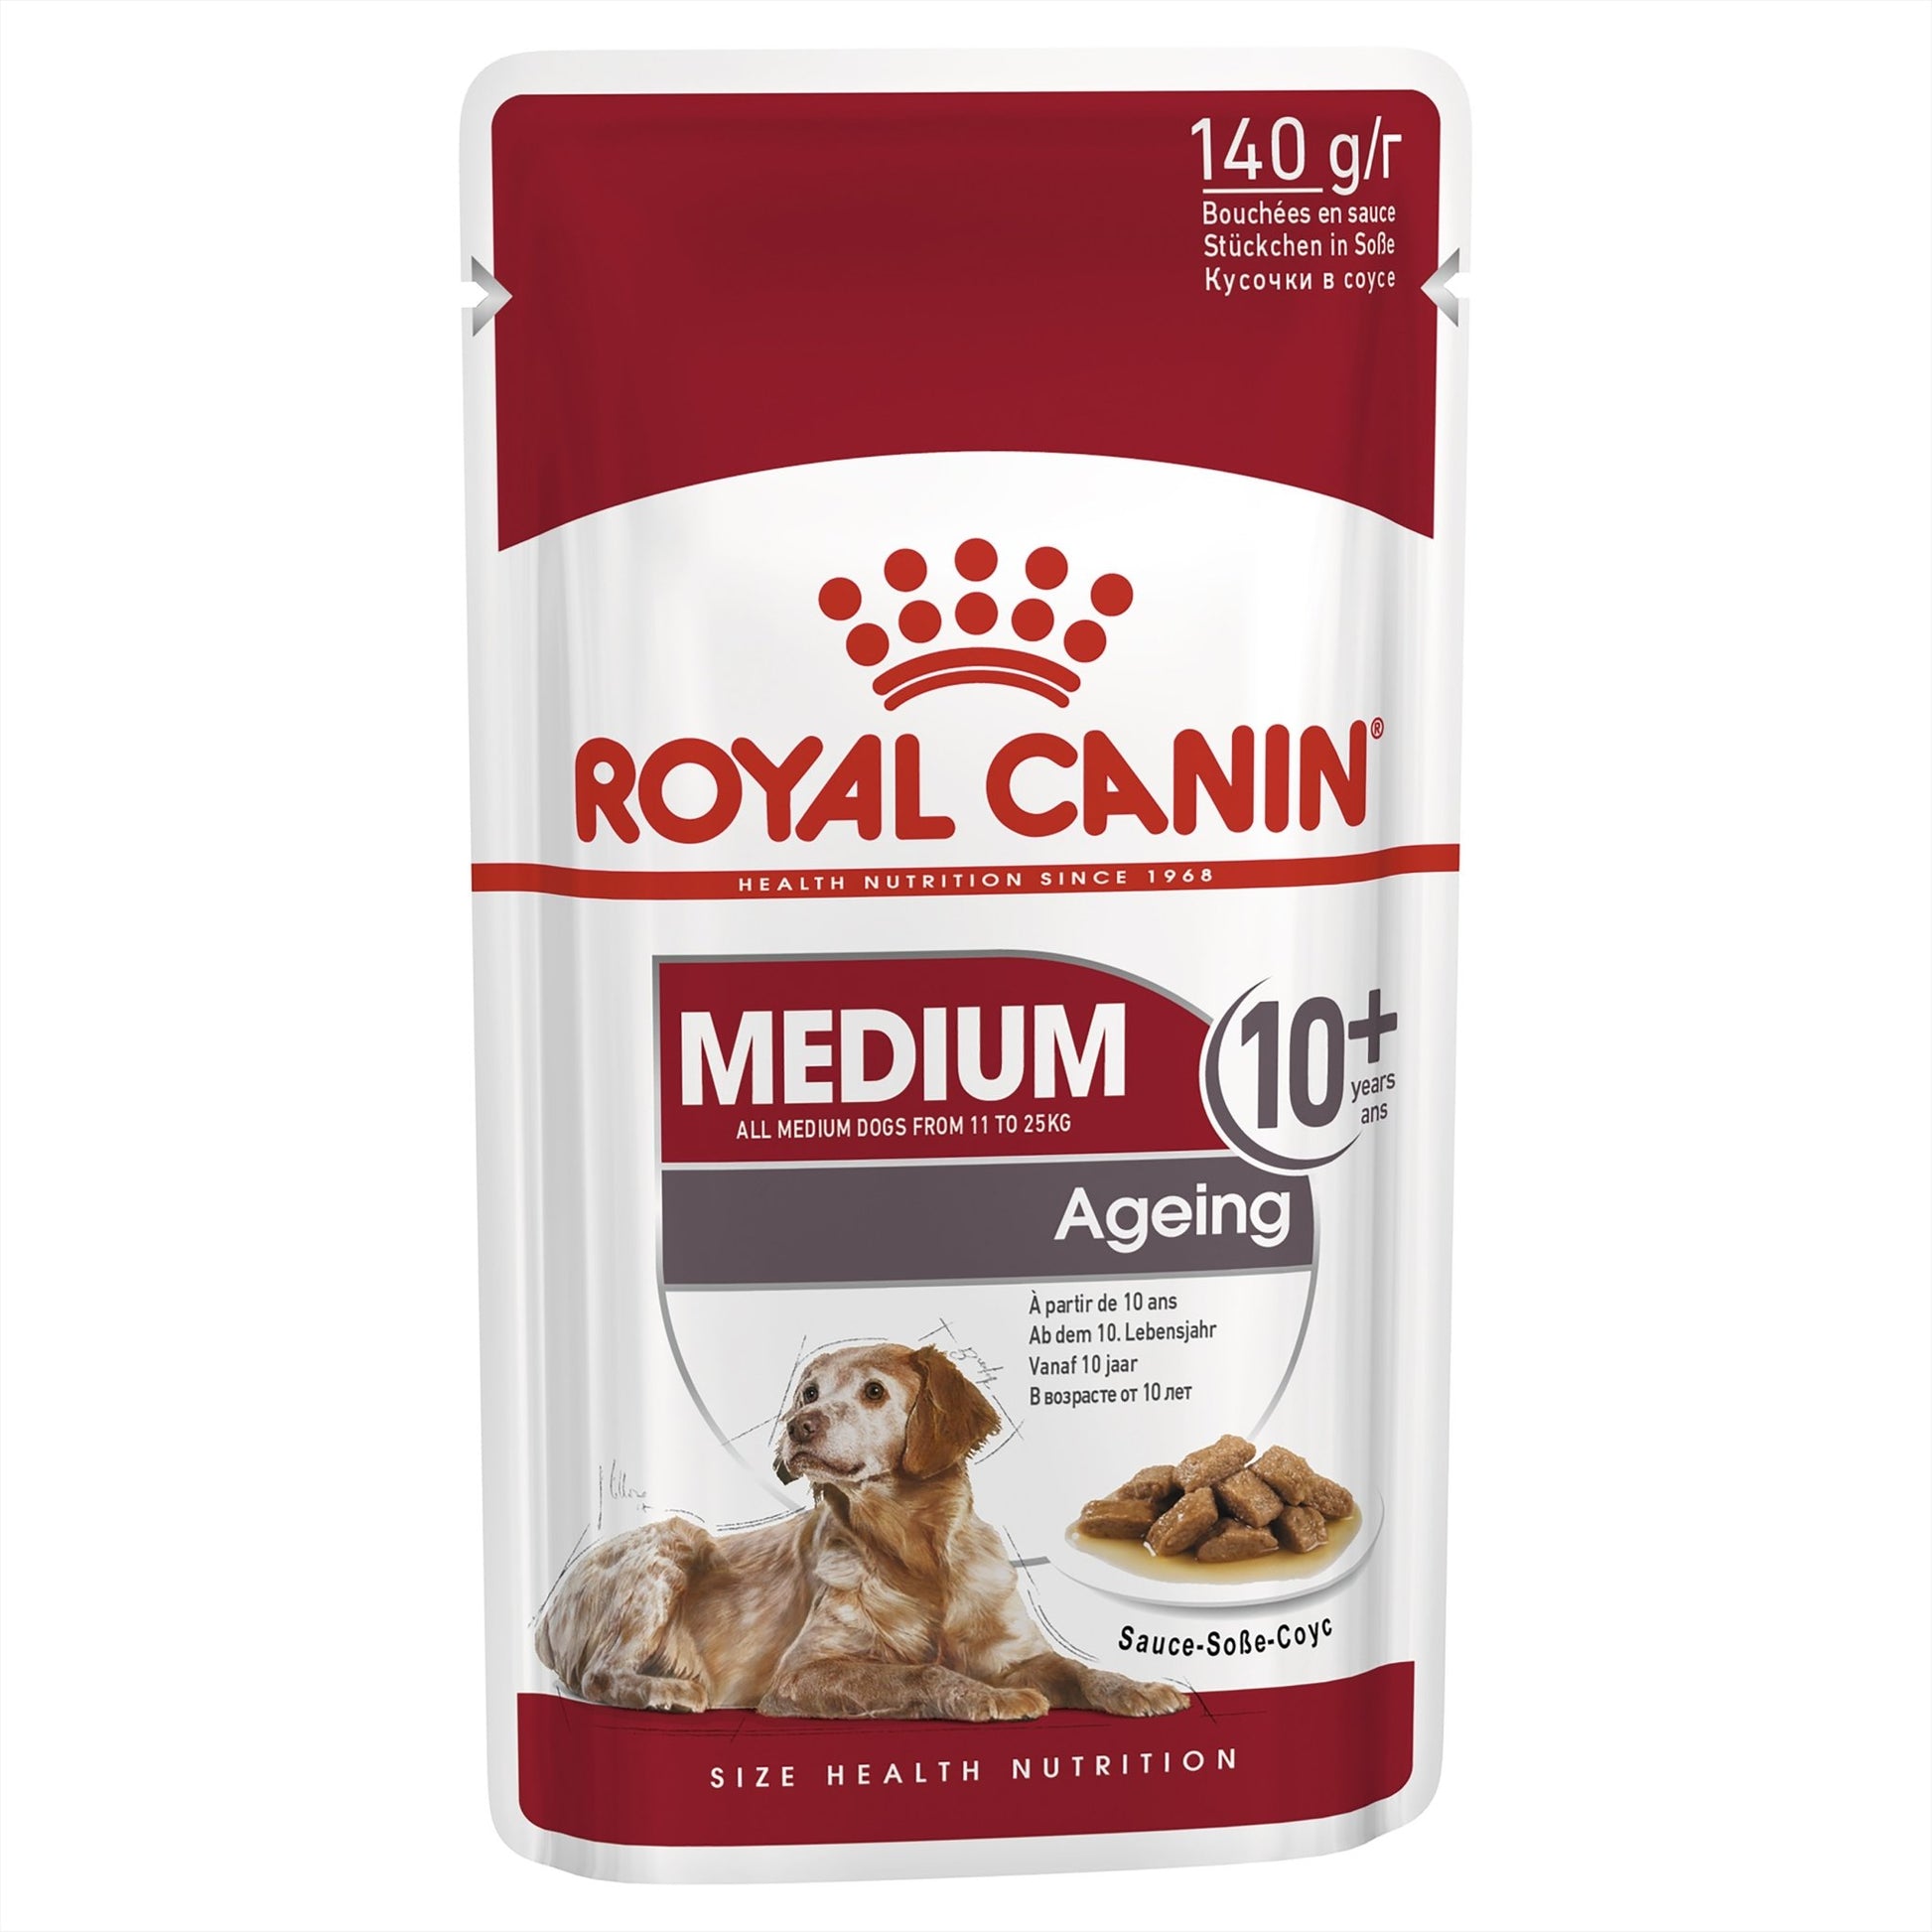 Royal Canin Dog Wet Pouches Medium Ageing 10x140g - Woonona Petfood & Produce